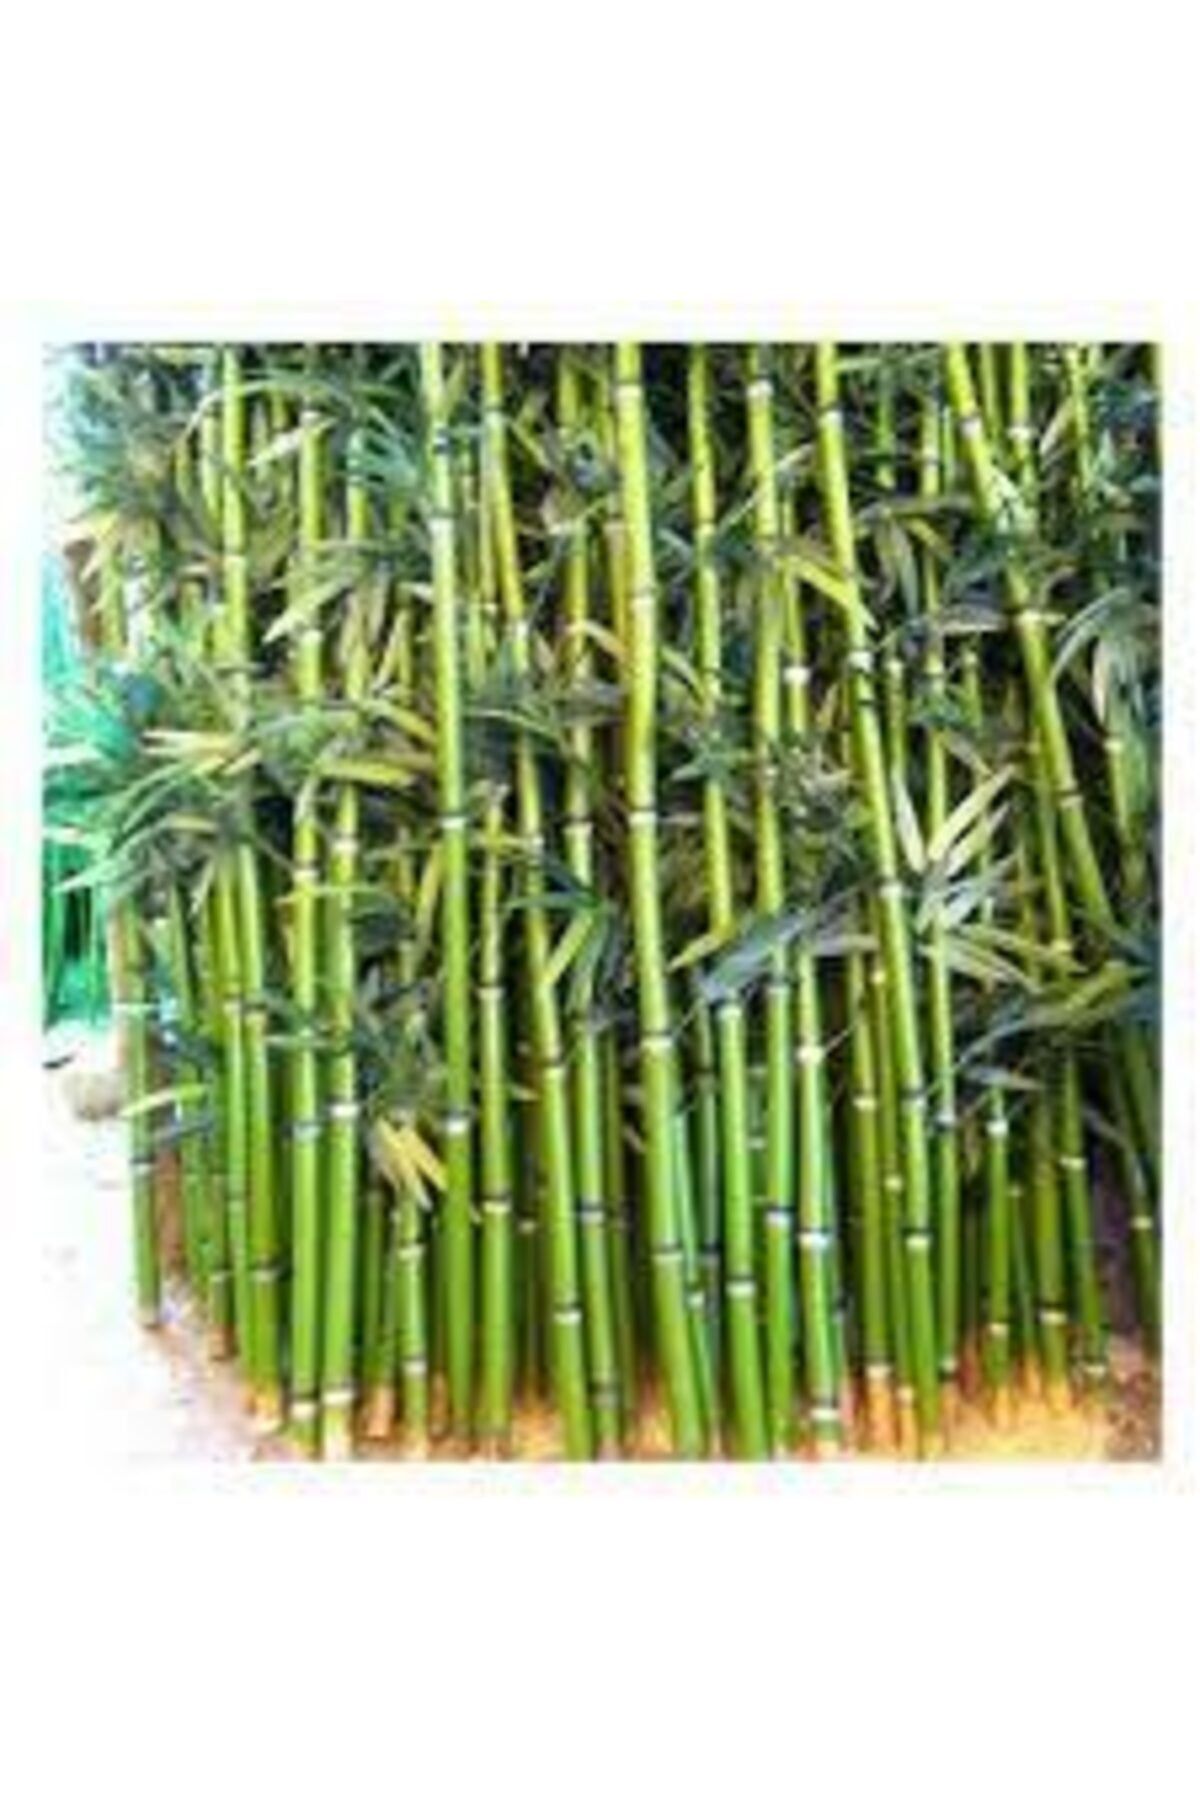 ata tohumculuk 10 Adet Yeşil Bambu Ağaç Tohumu Orjinal Moso Bambu Tohumu Saksı Toprak Sürpriz Hediye Sebze Tohumu